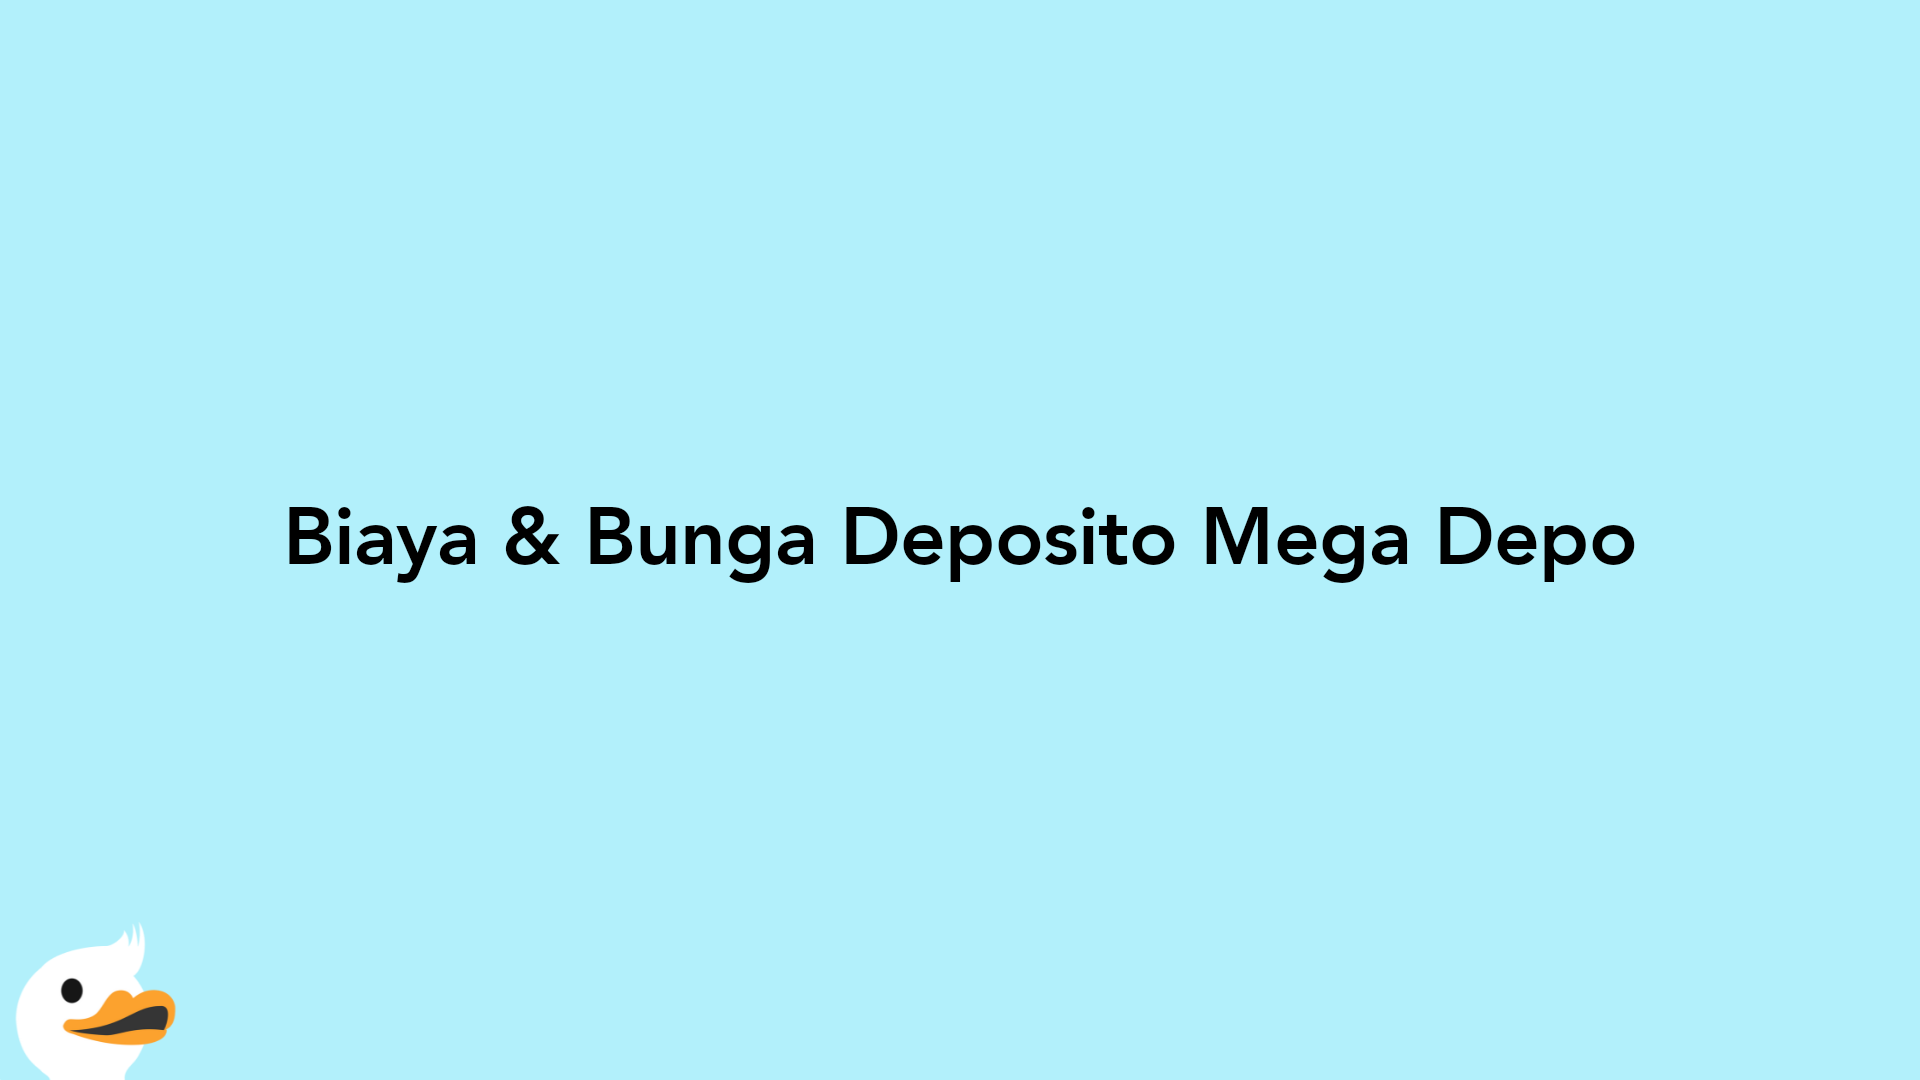 Biaya & Bunga Deposito Mega Depo